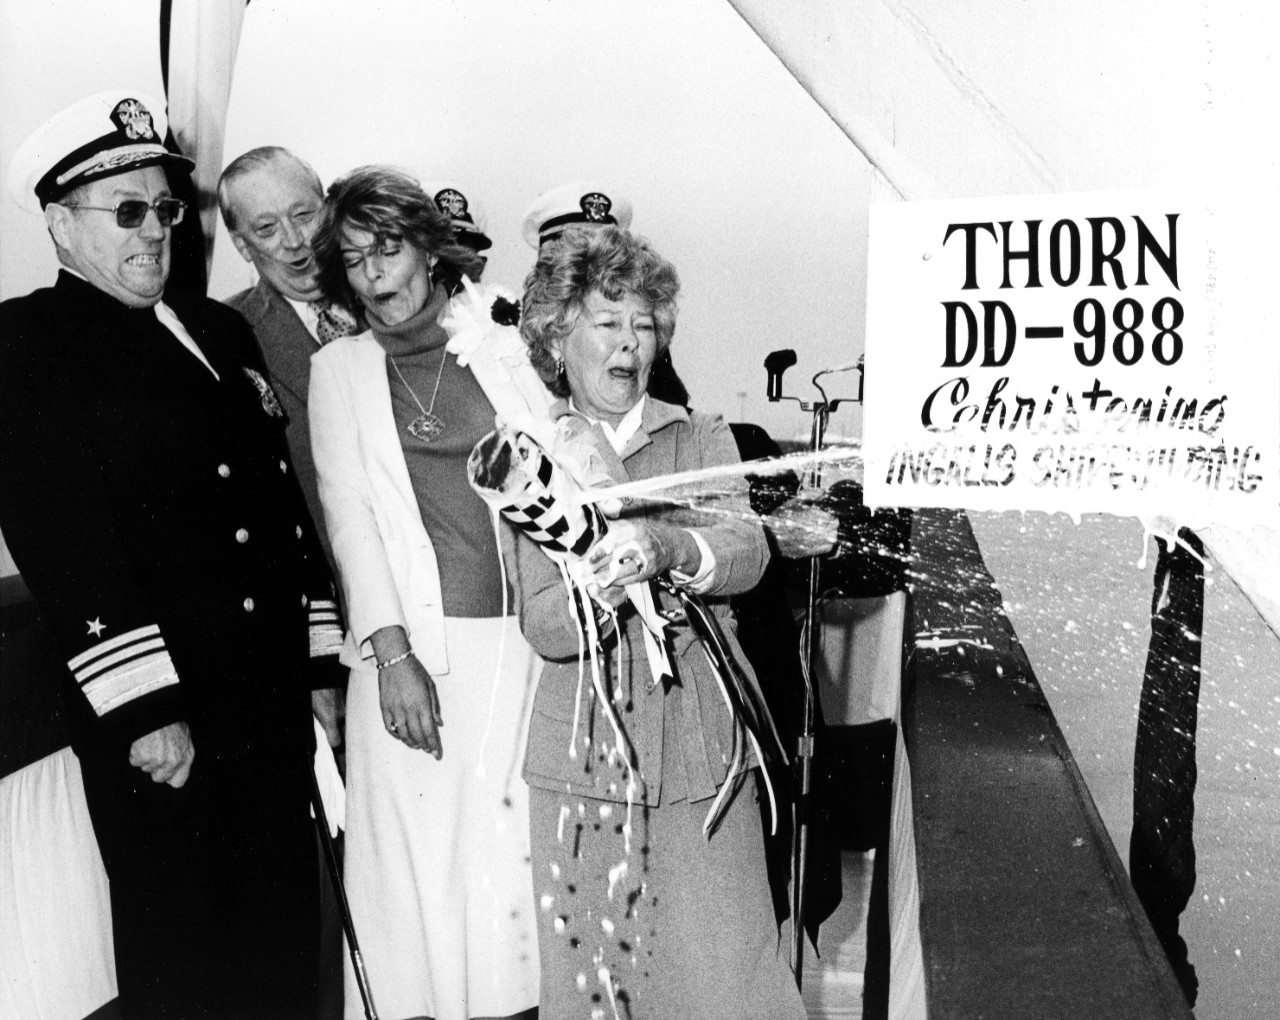 UA 471.14 USS Thorn (DD-988) Collection